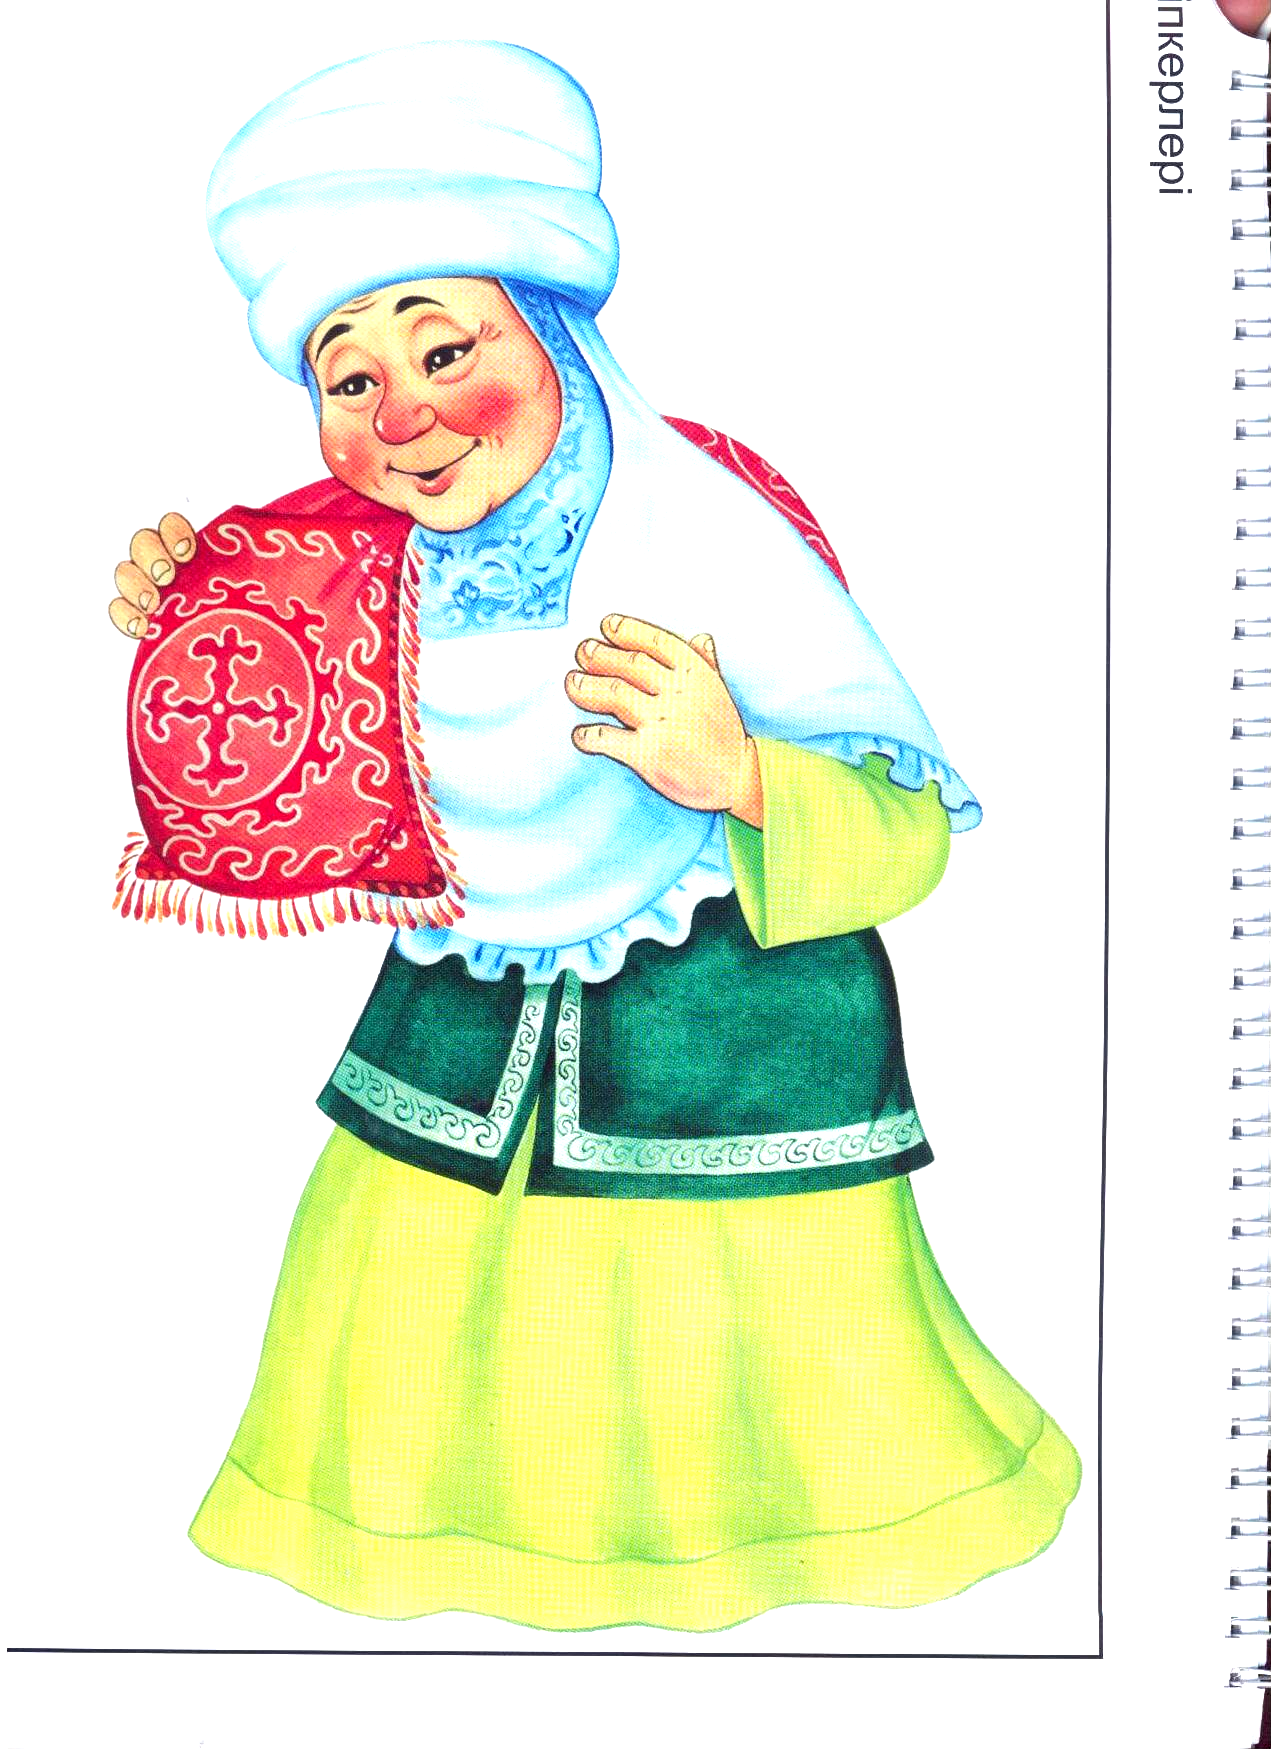 Бабушка на казахском языке. Казахский национальный одежда бабушка. Бабушка и дедушка в казахских национальных костюмах. Бабушкамультяшный казахский. Казахская бабушка.